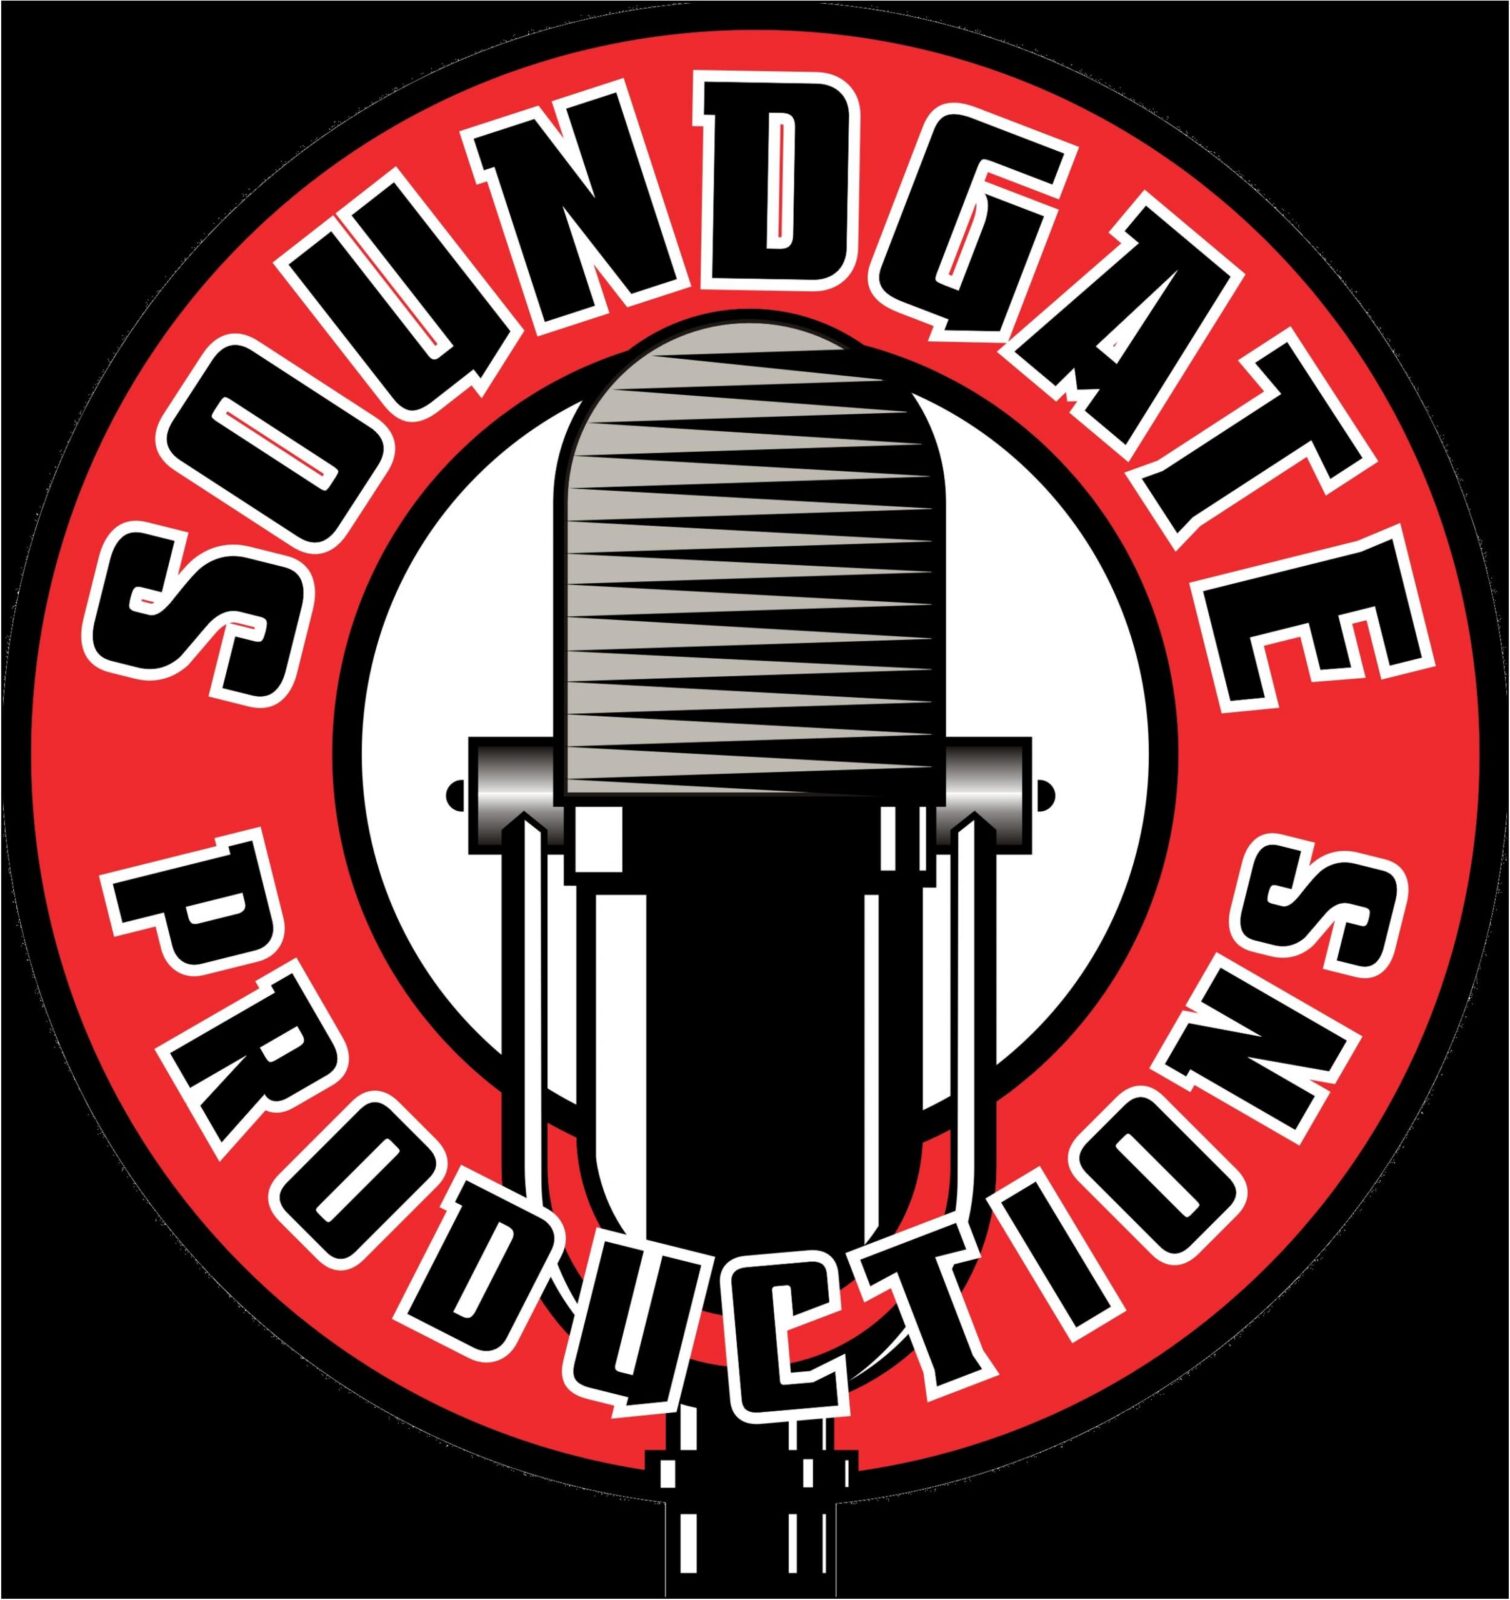 www.SoundGateProductions.com